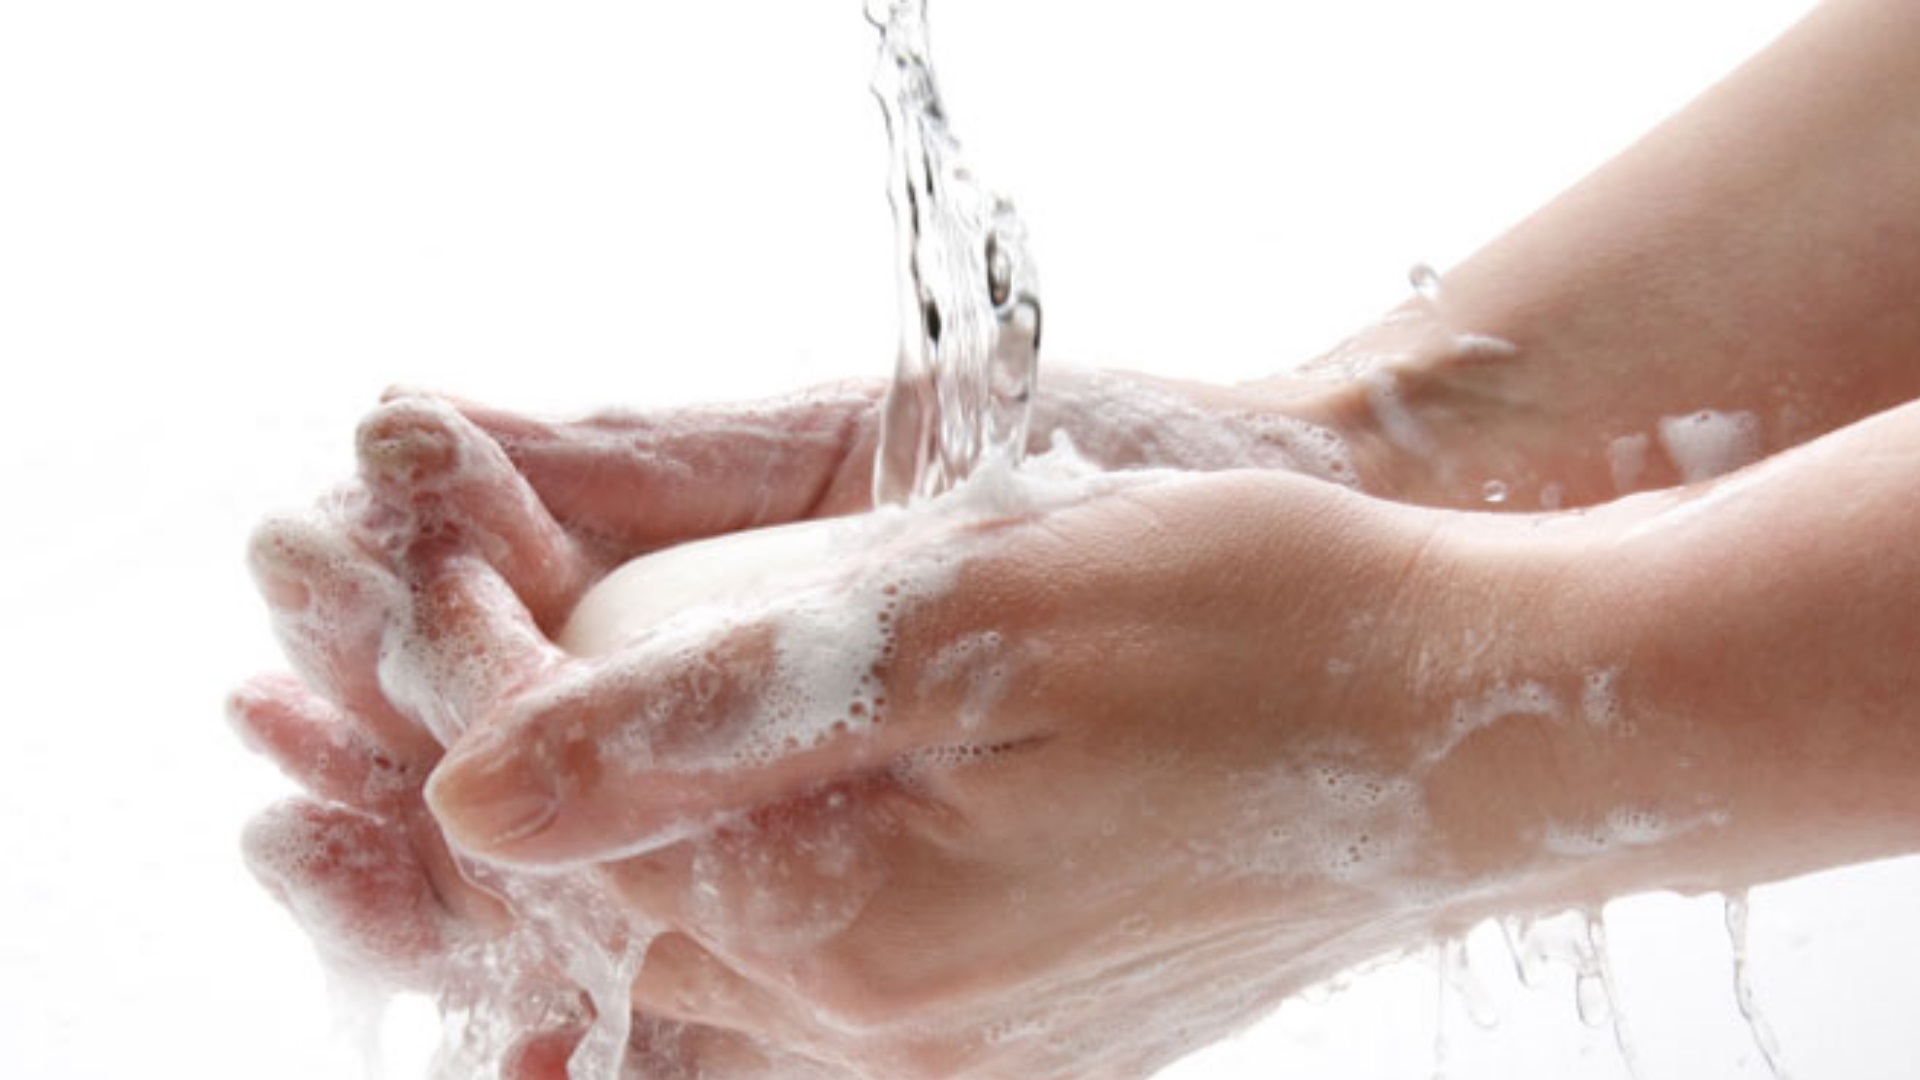 fpi-hand-soap-and-sanitizer